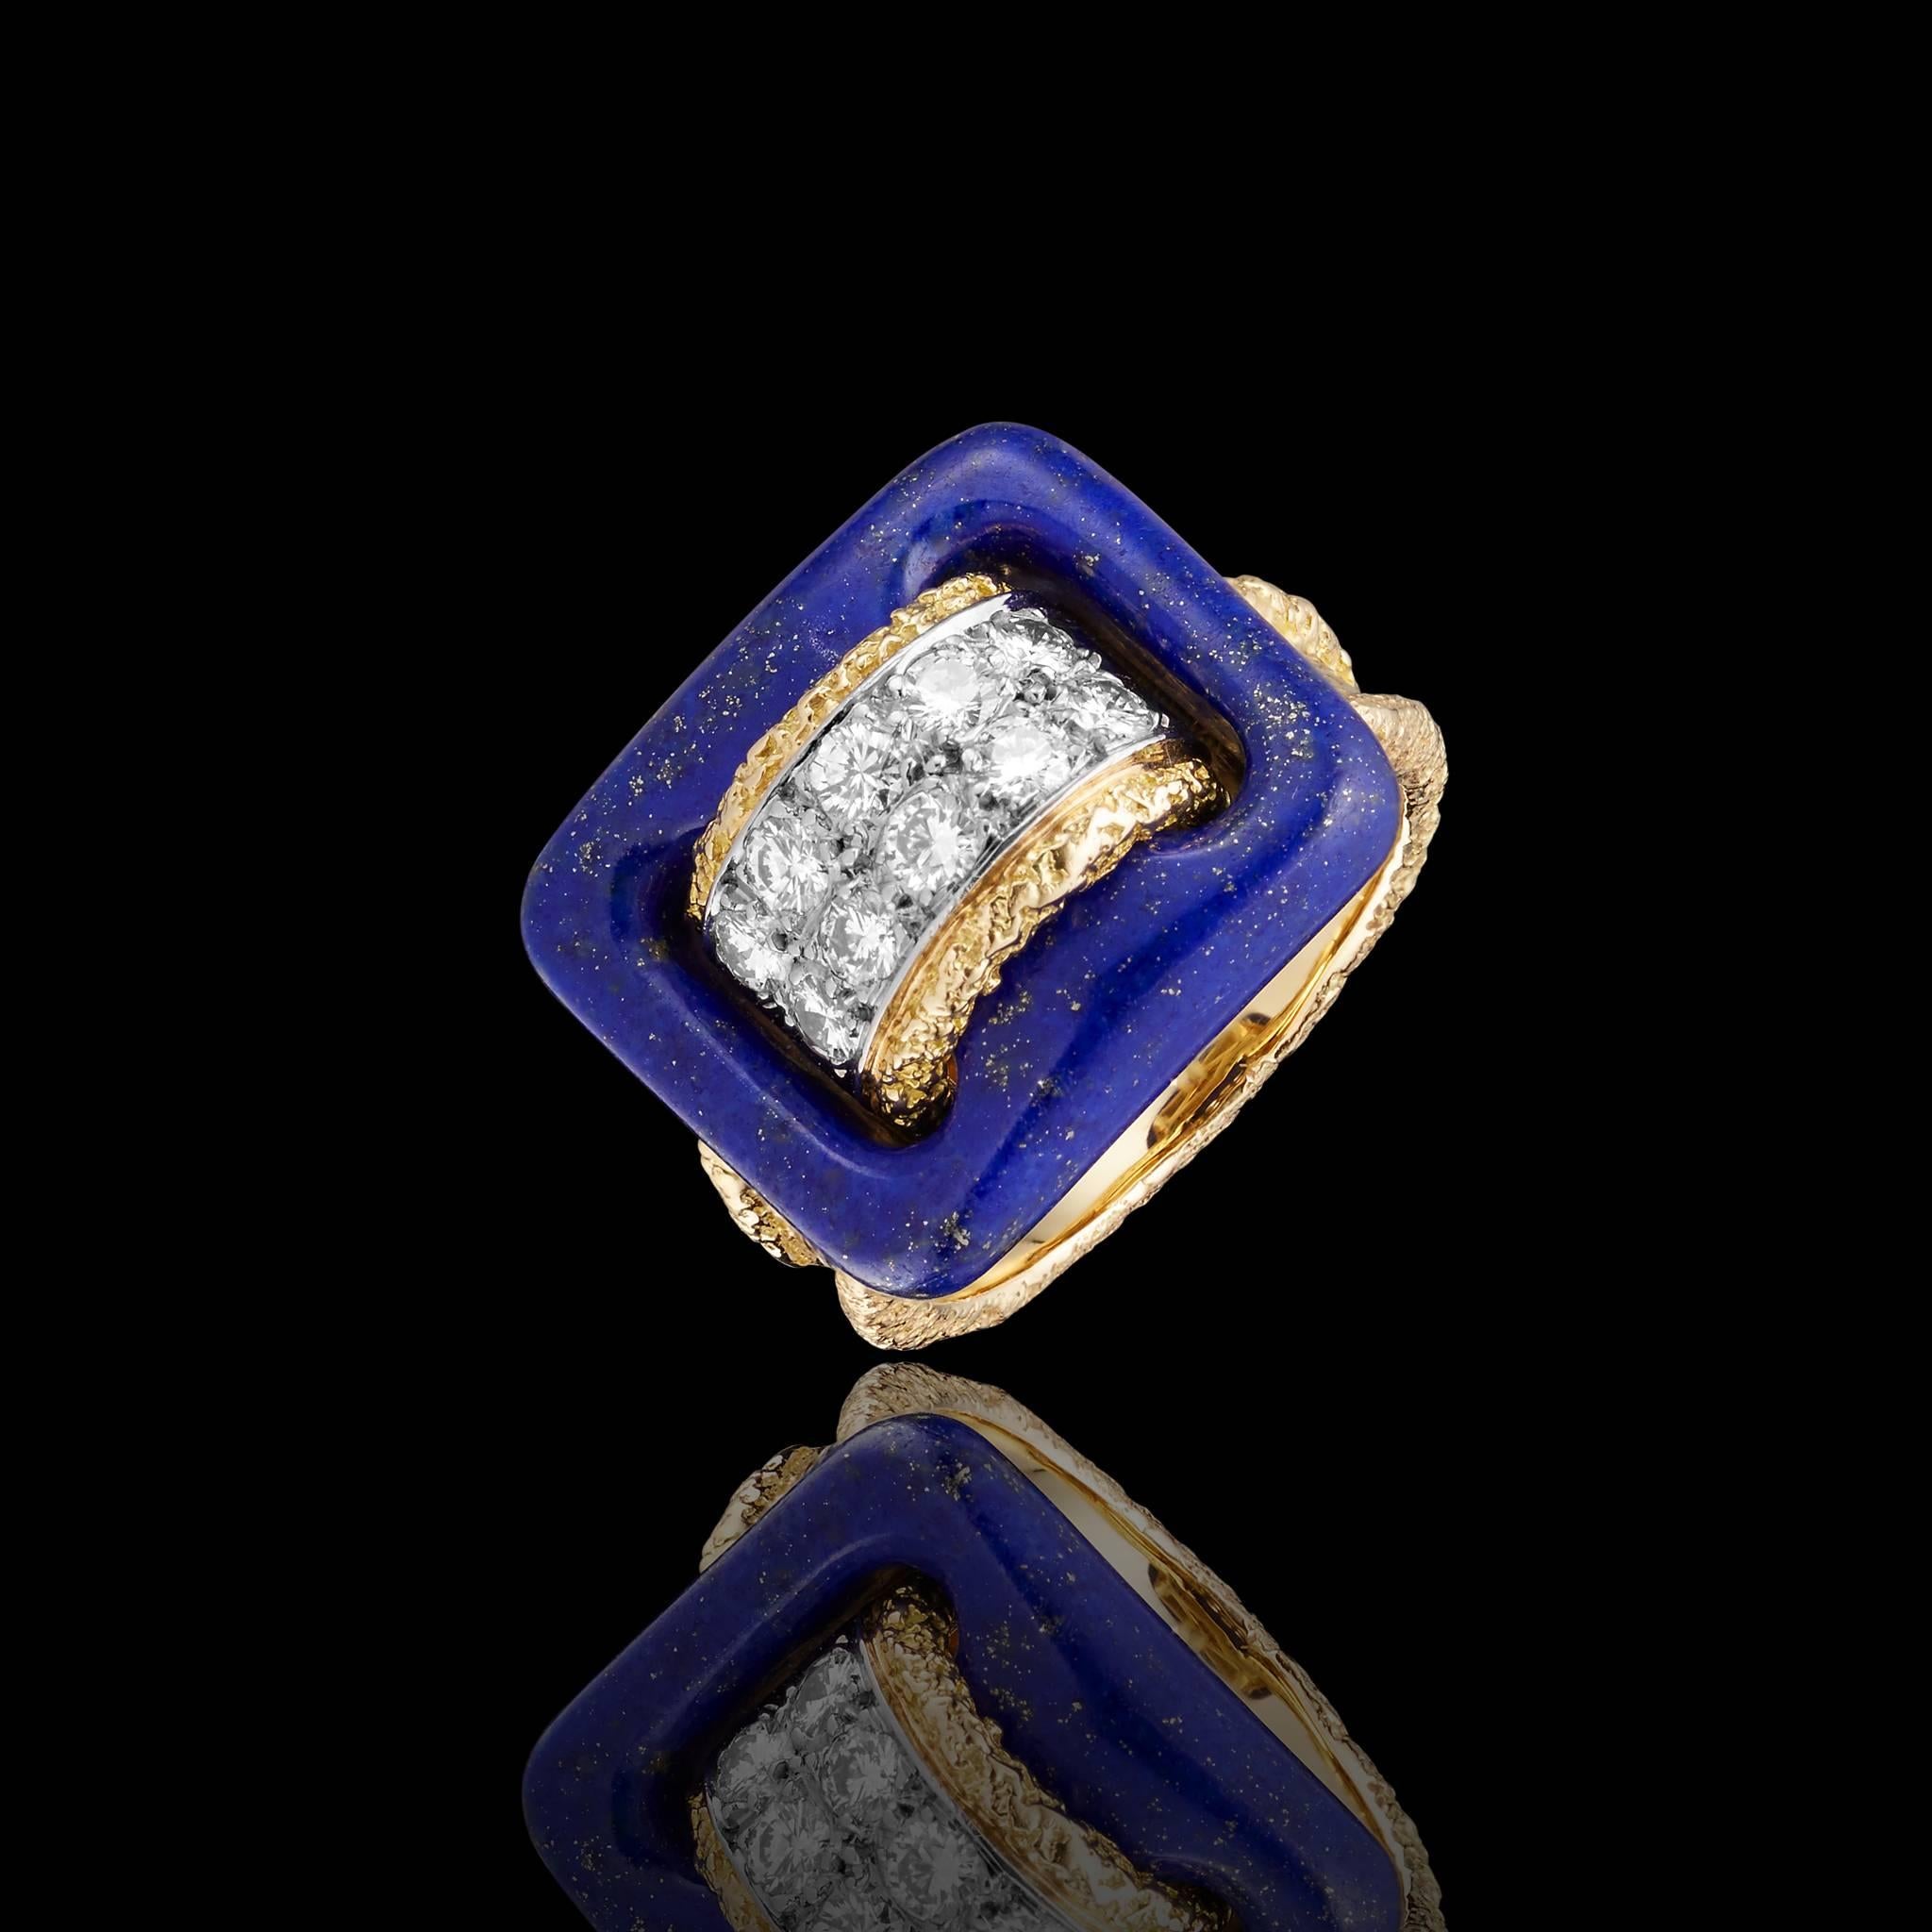 Van Cleef & Arpels ring in 18 carts yellow Gold,diamonds and lapiz lazuli.
-10 brillants'cut white diamonds.
-Lapiz Lazuli.
-Signed : Van Cleef & Arpels.
-Numbered :119 506.
-Taille :53 Metric/6,5 American/English M1/2/Japanese 13
